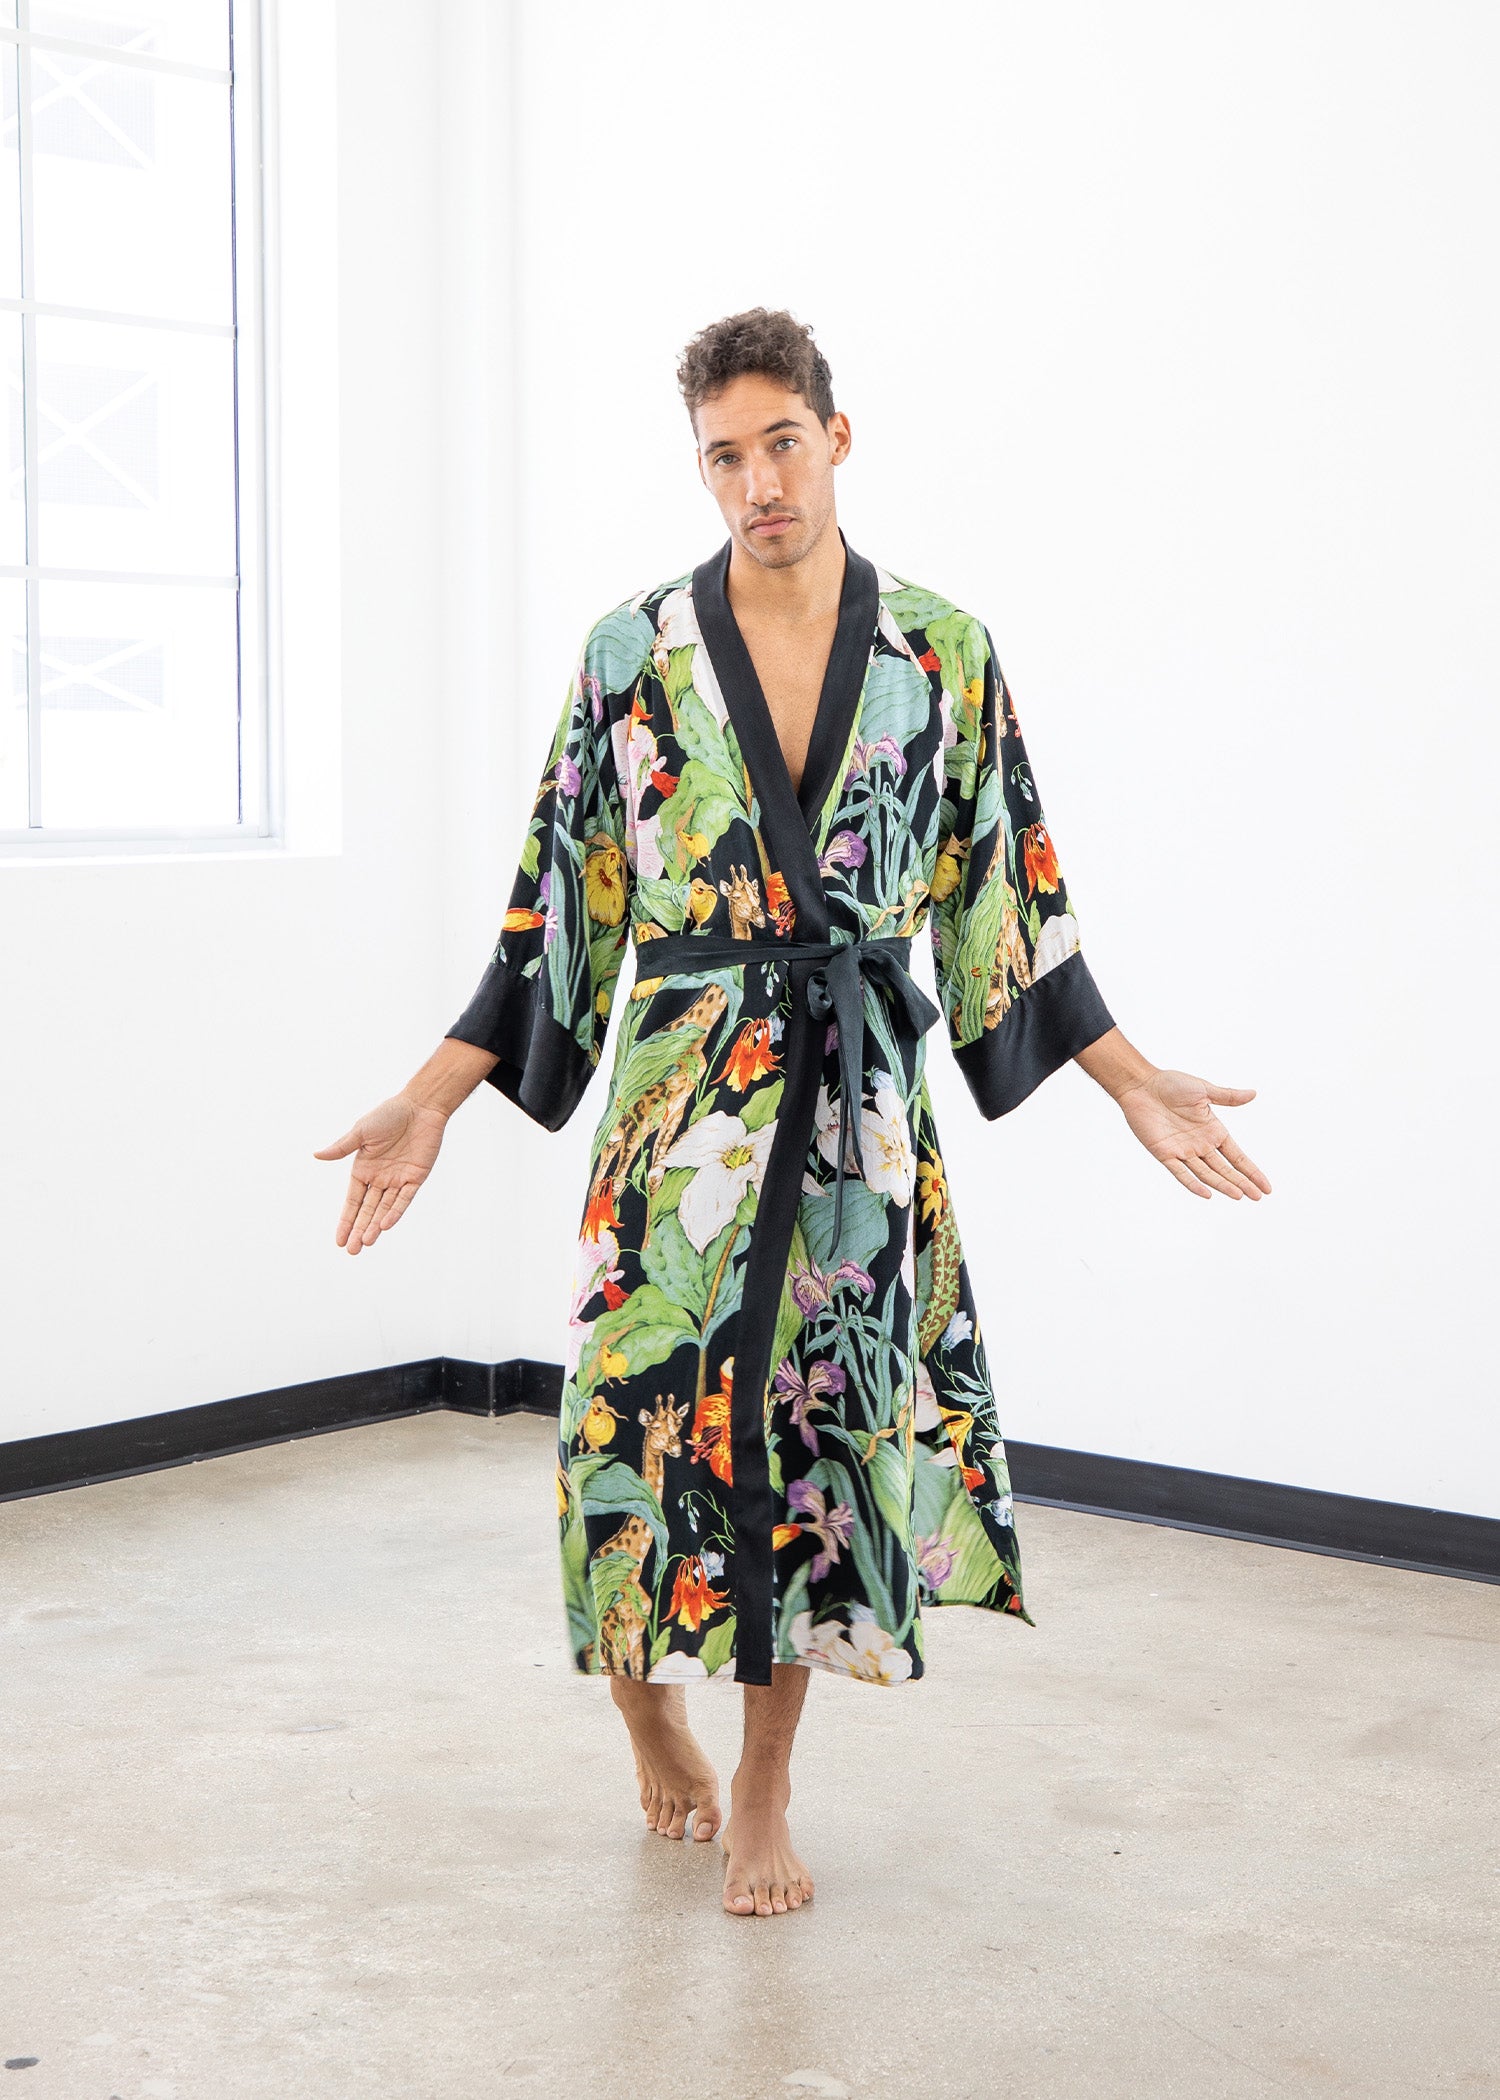 Choosing Unique Feel and Comfort Silk Robe